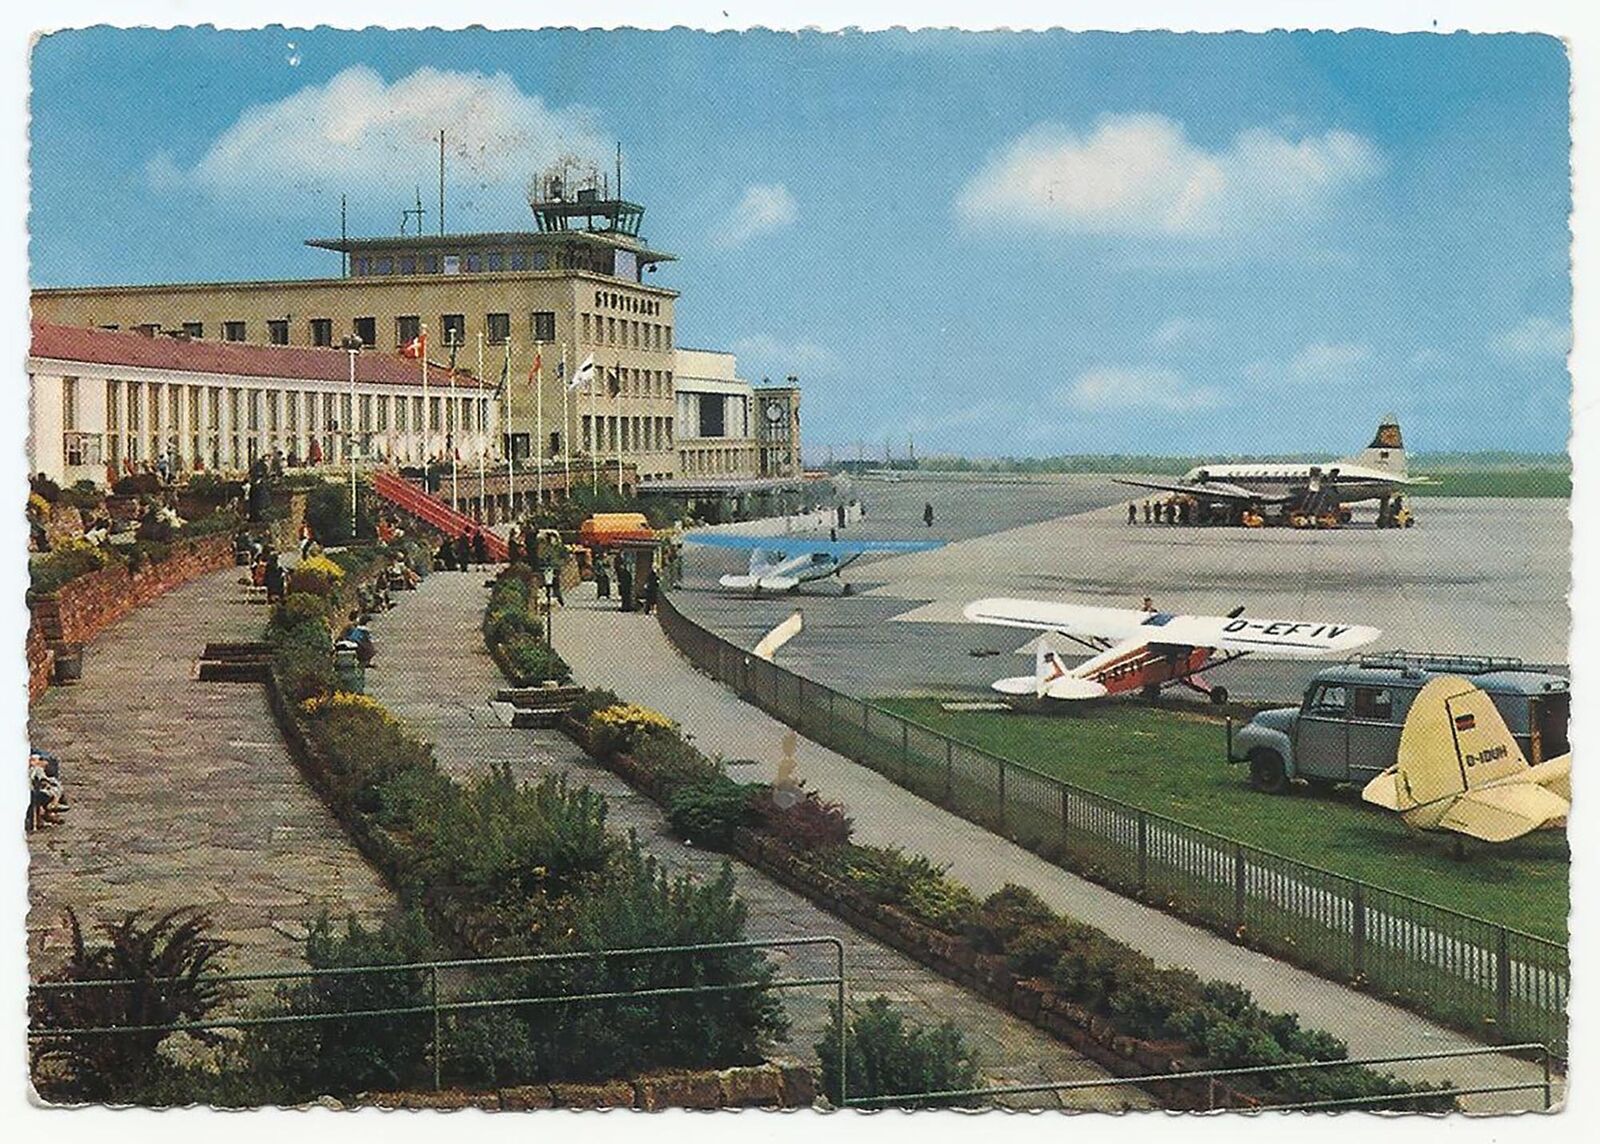 Stuttgart Germany, Vintage Postcard, View of Airport-Airplanes, 1964